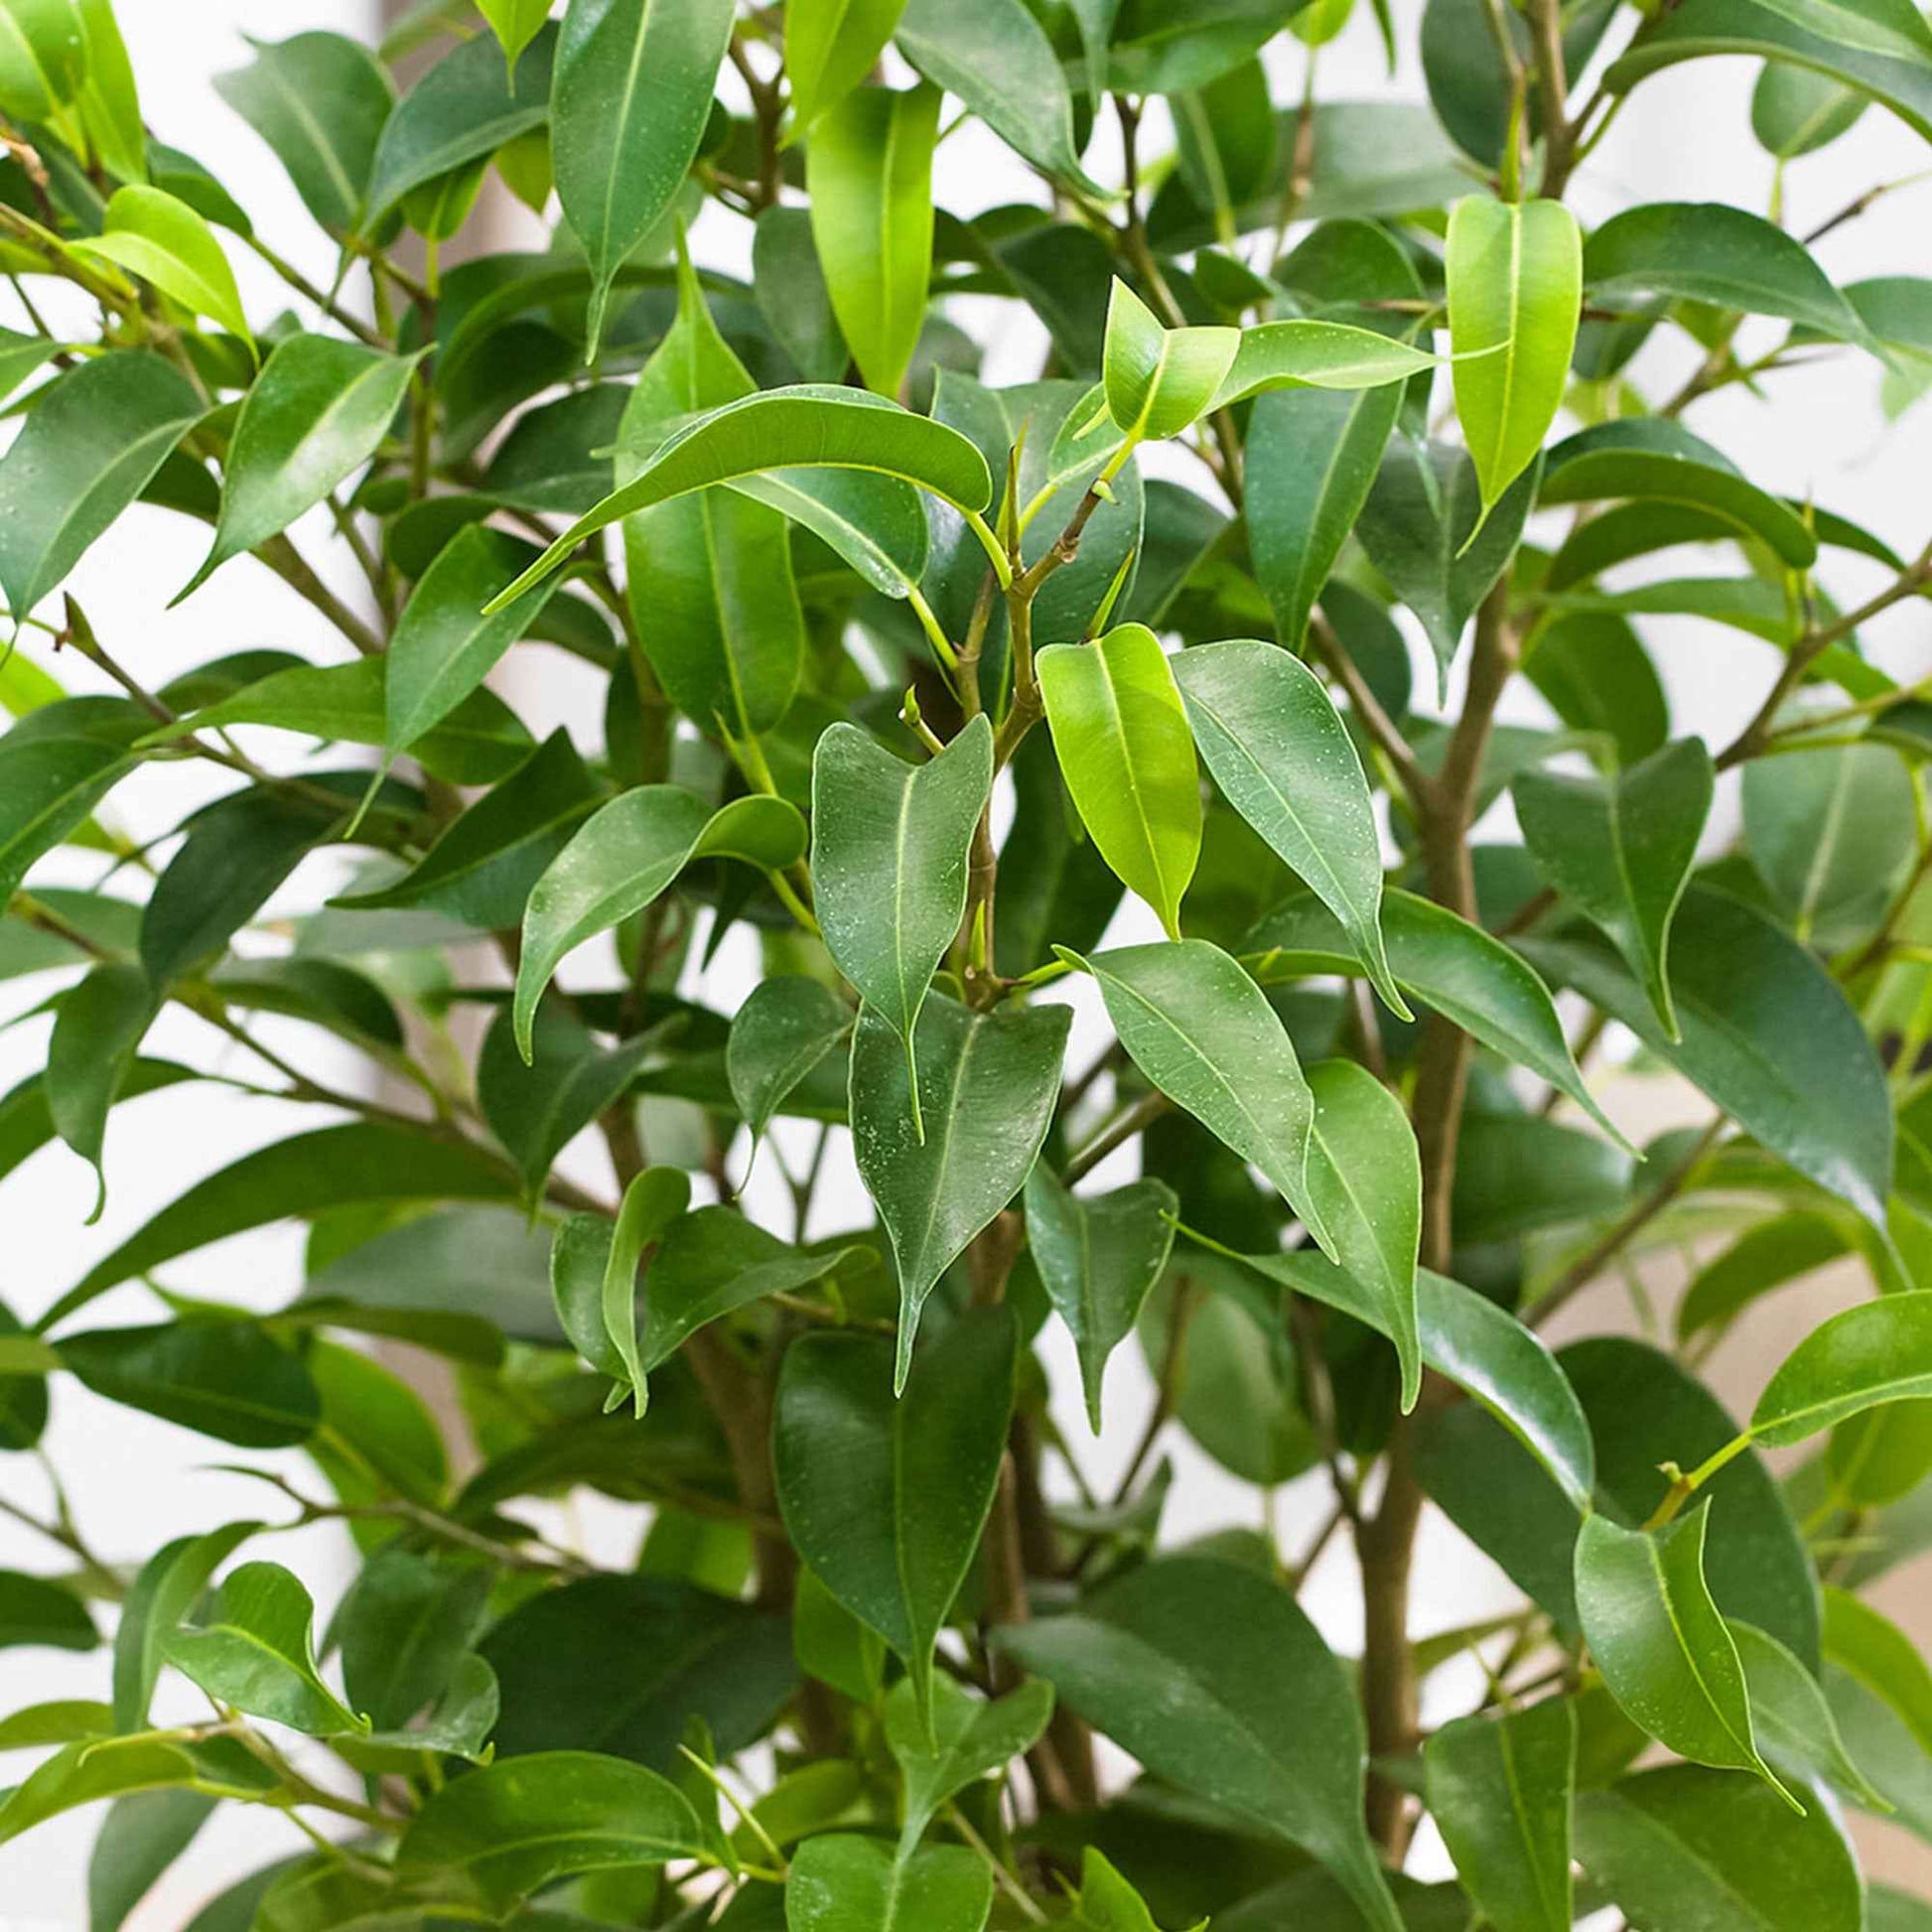 2x Treurvijg Ficus benjamina Natasja - Groene kamerplanten